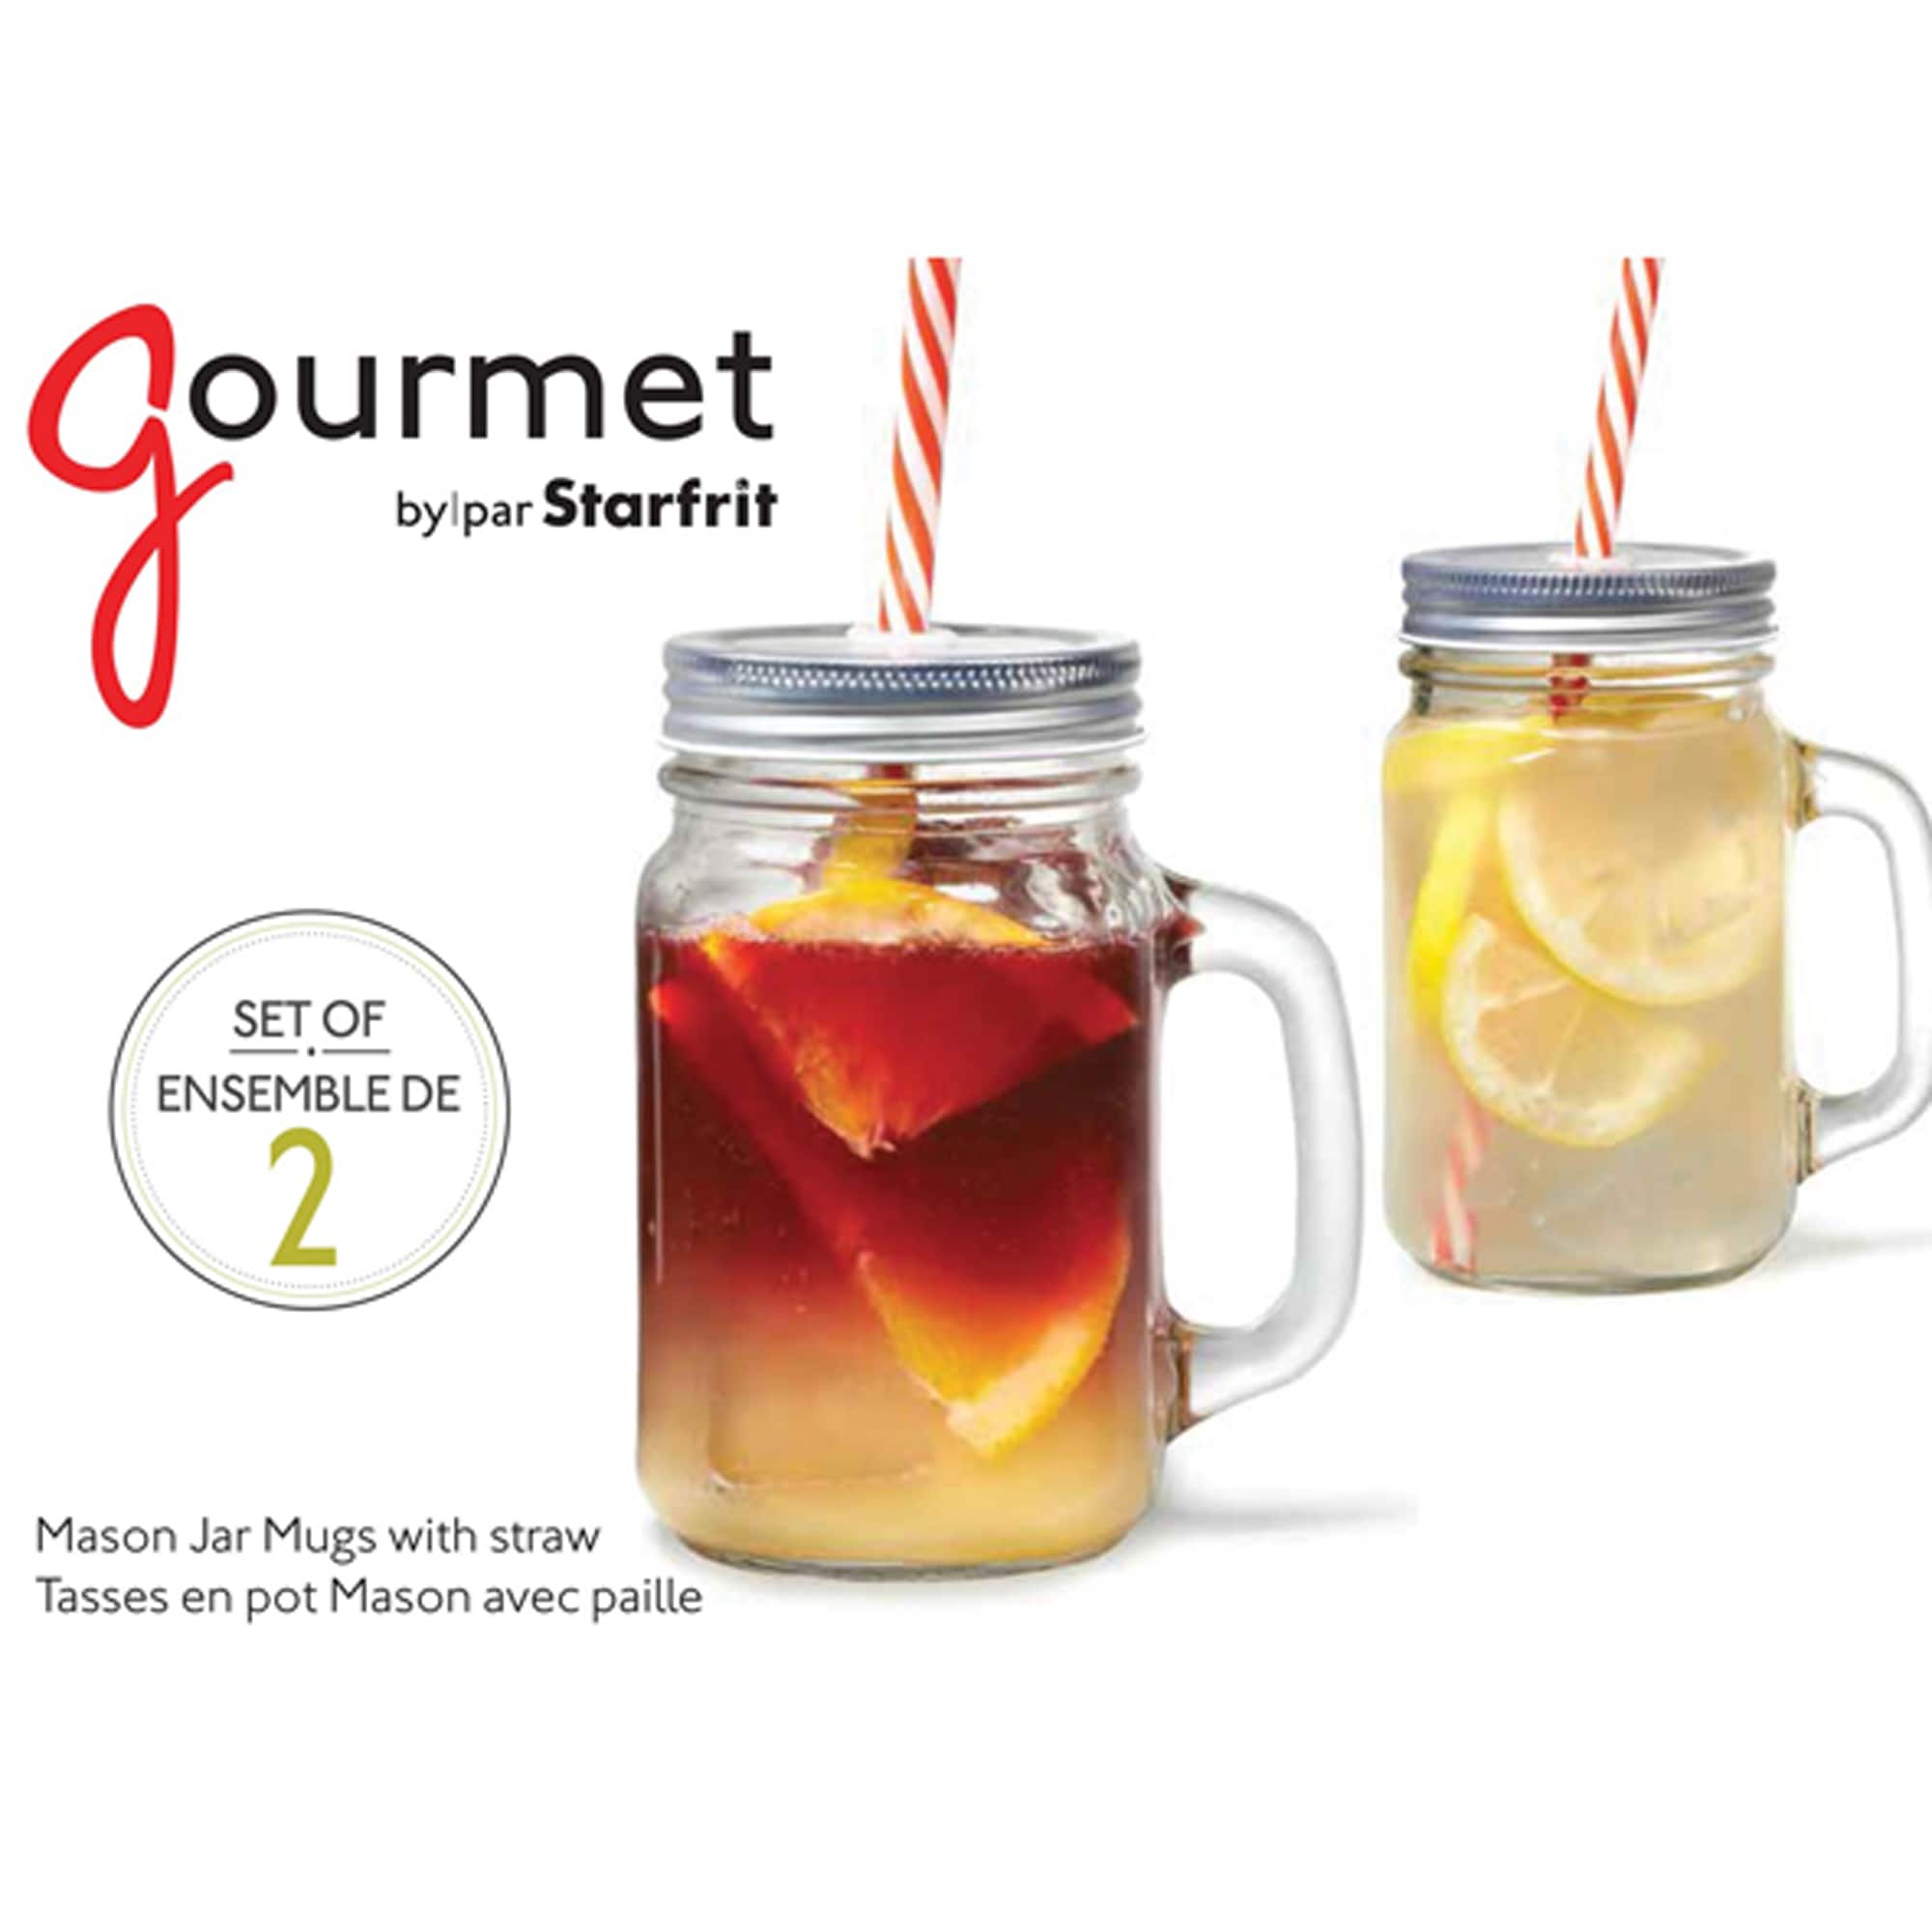 Gourmet by Starfrit 16oz. Mason Jar Mugs with Straws, 2ct.